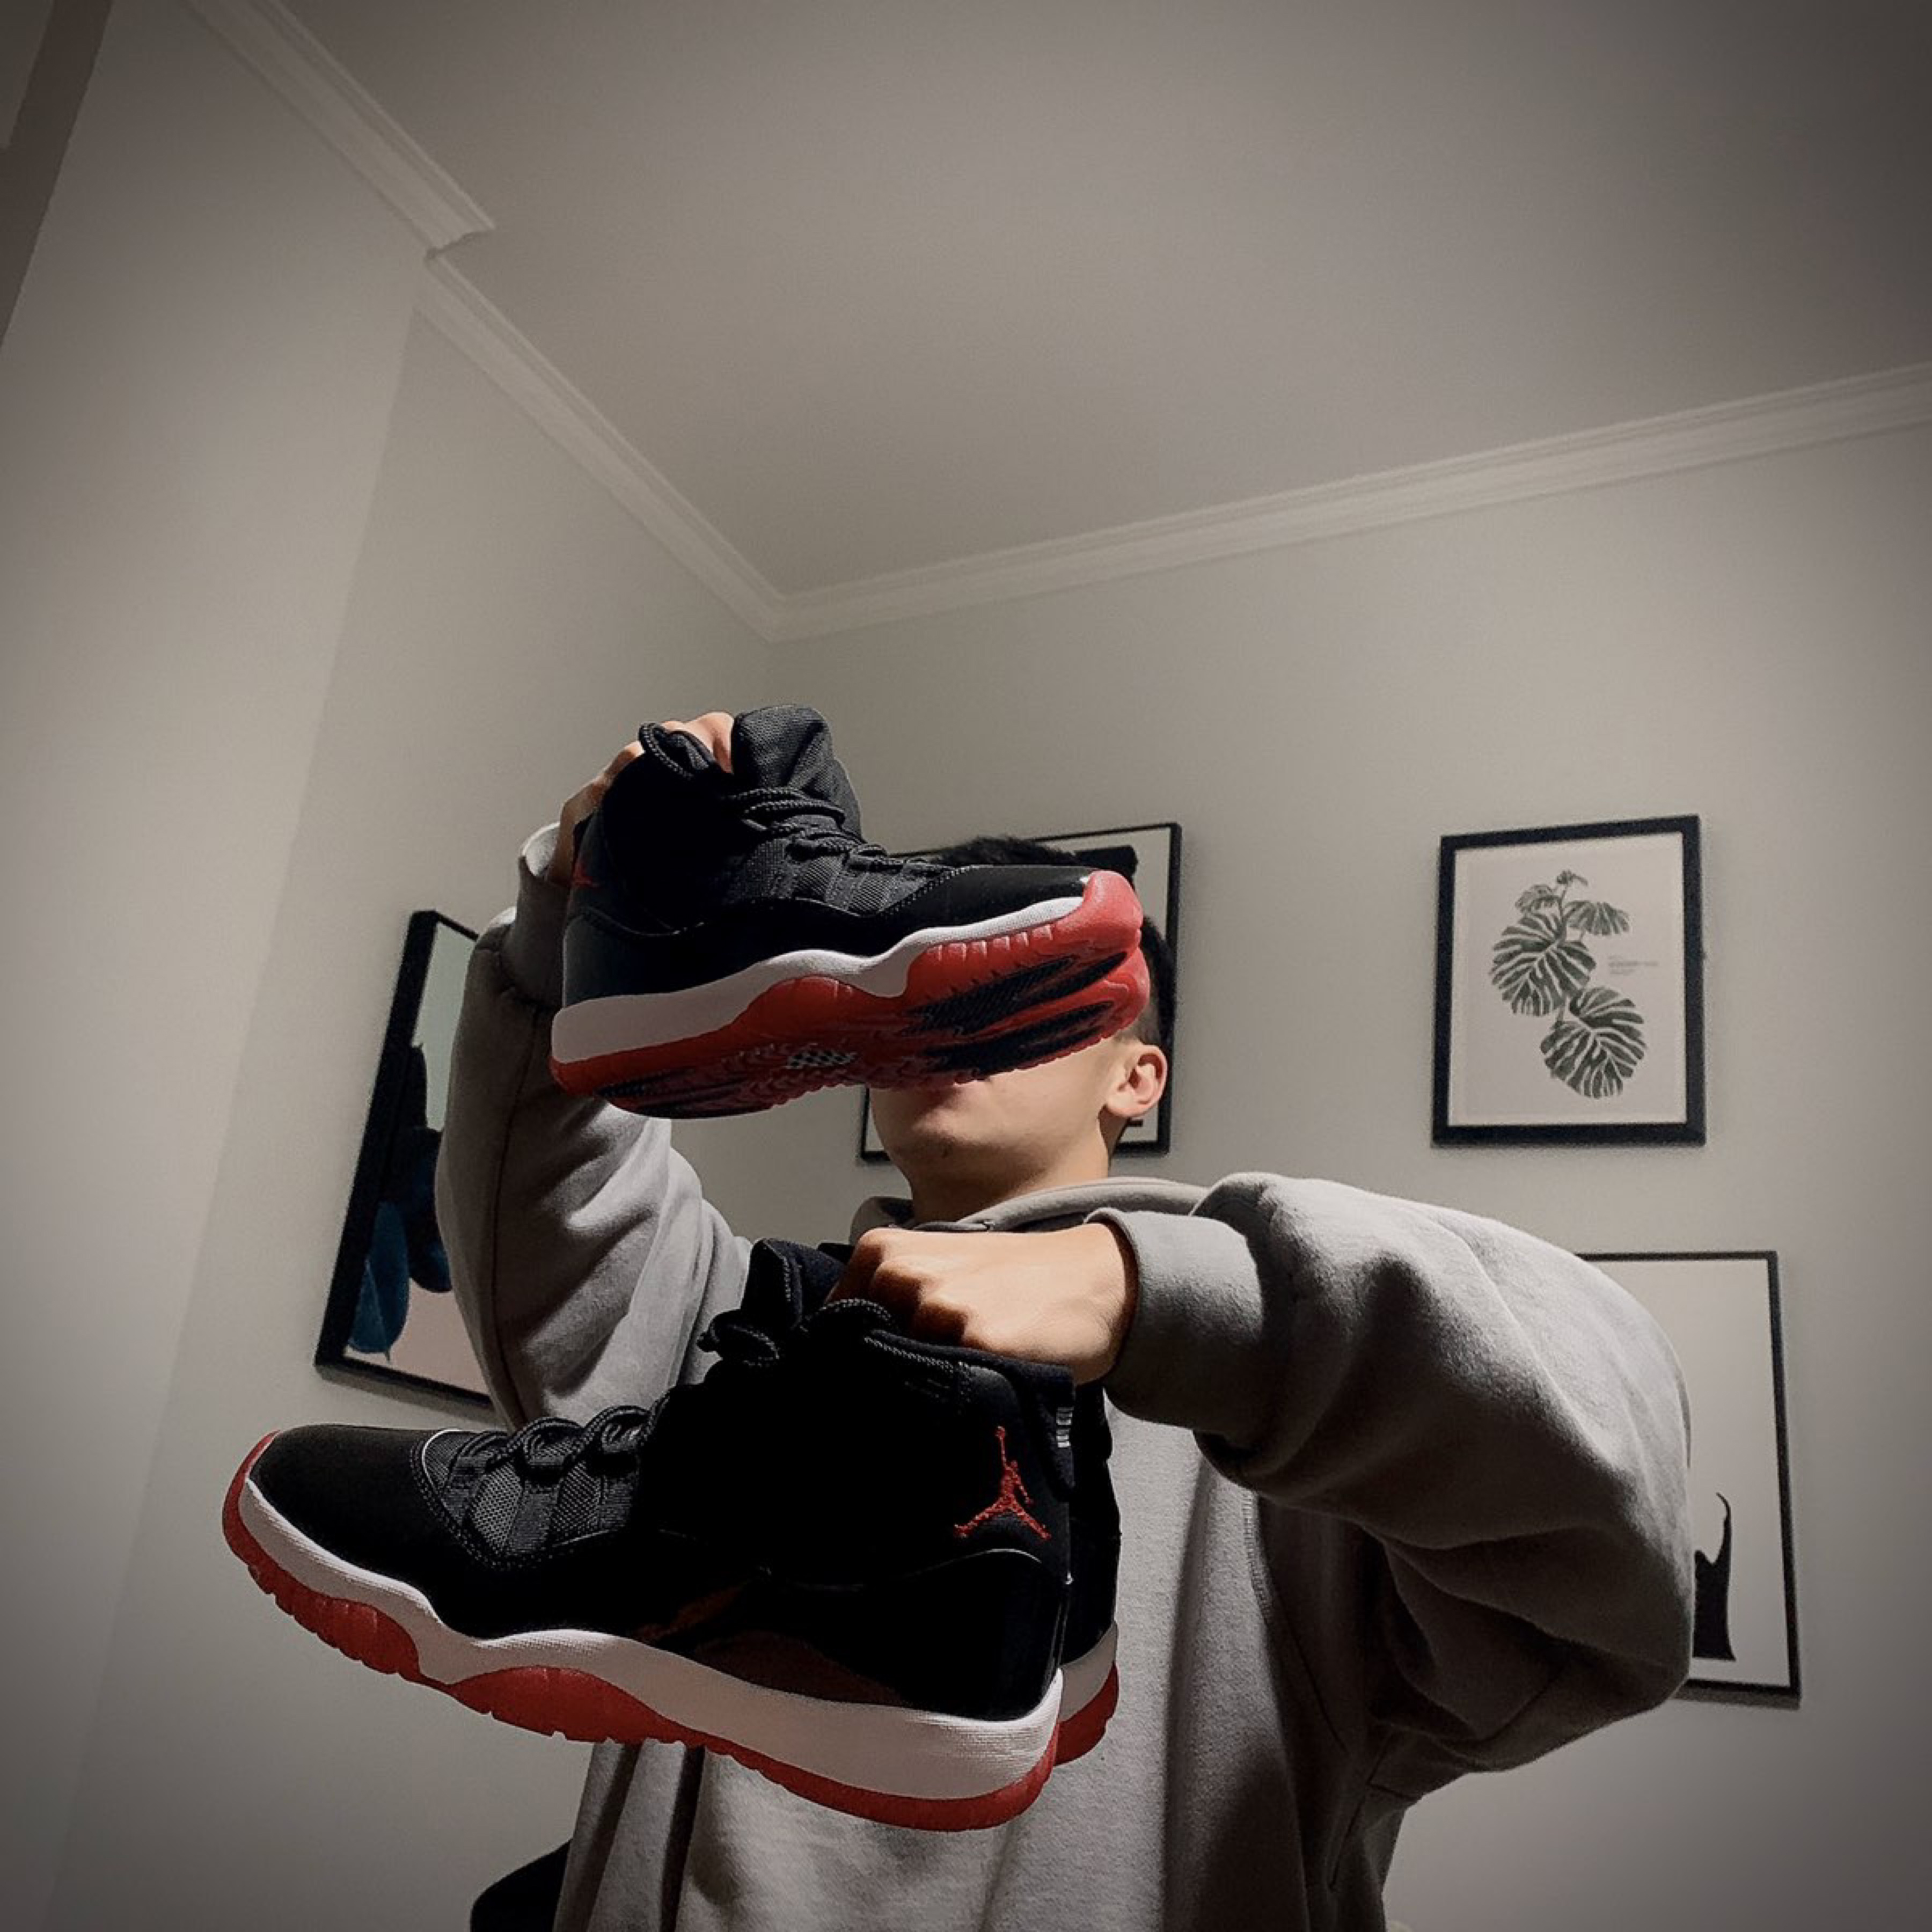 Air Jordan 11 Retro 'Bred' 2019 378037-061 - Shop the Iconic Sneaker Now